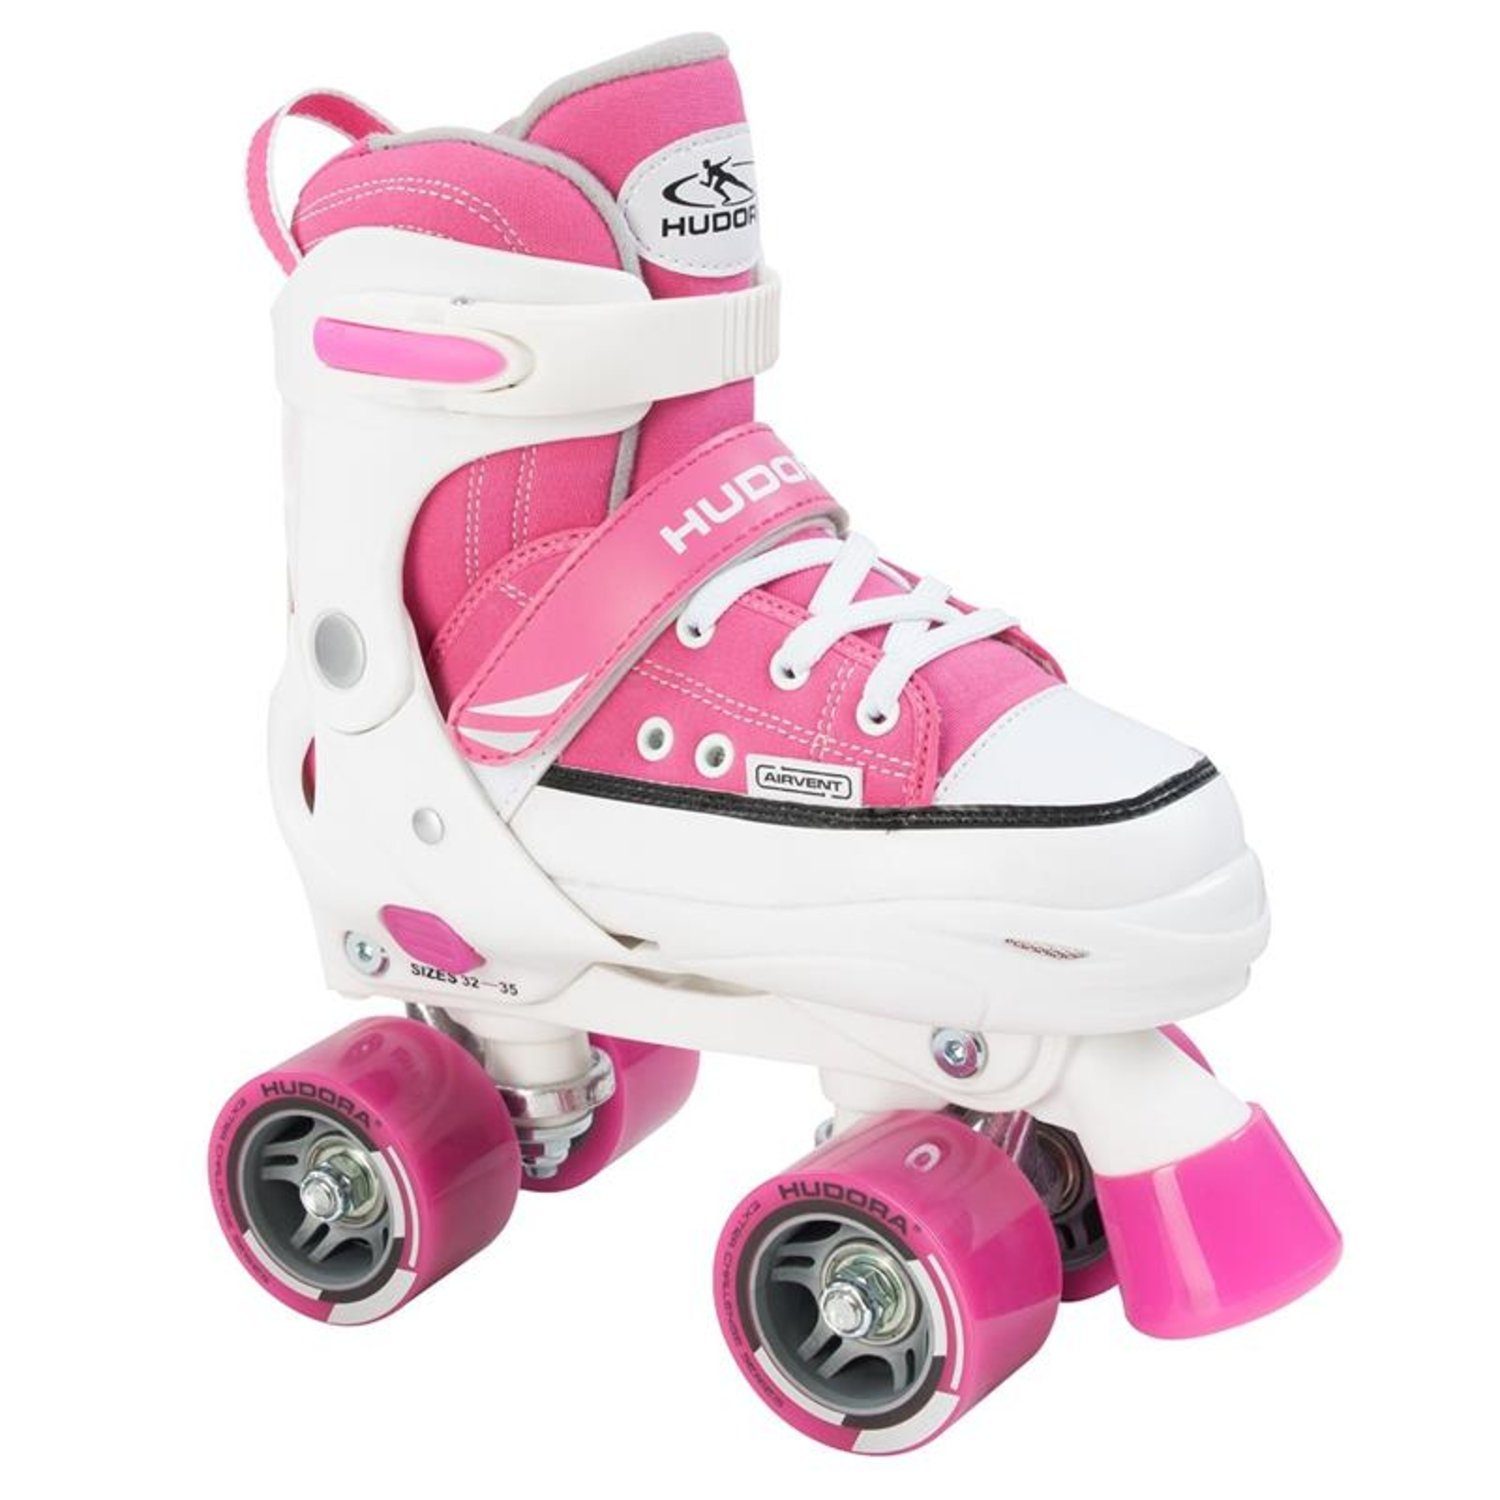 Hudora Inlineskates 22033 Roller Skate, 28-31 Gr. pink, verstellbar